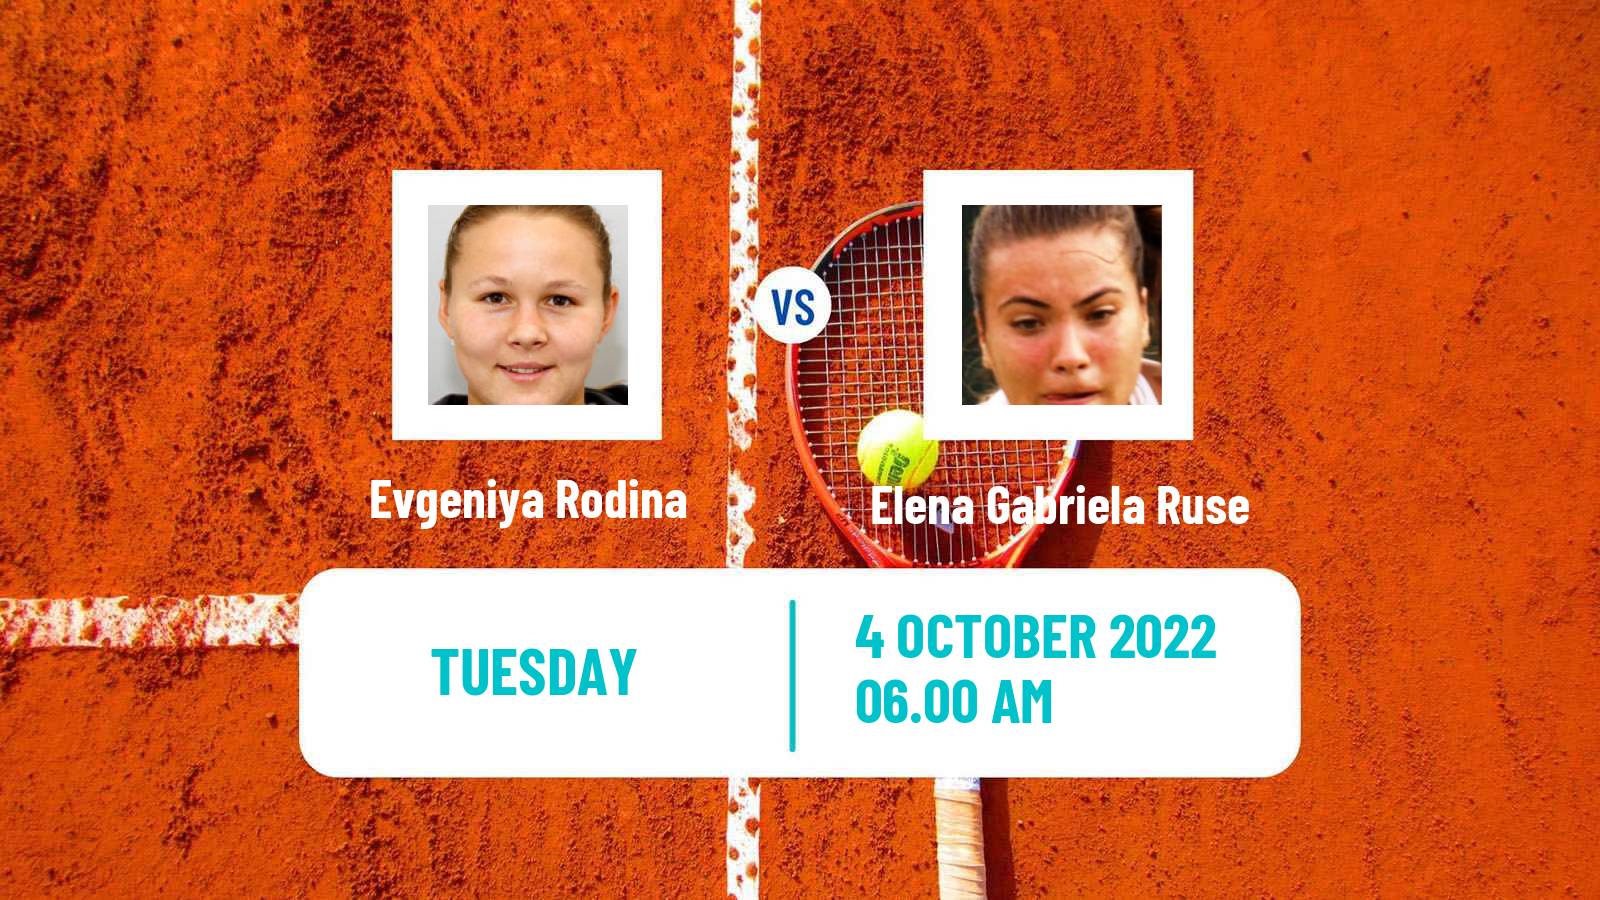 Tennis WTA Monastir Evgeniya Rodina - Elena Gabriela Ruse